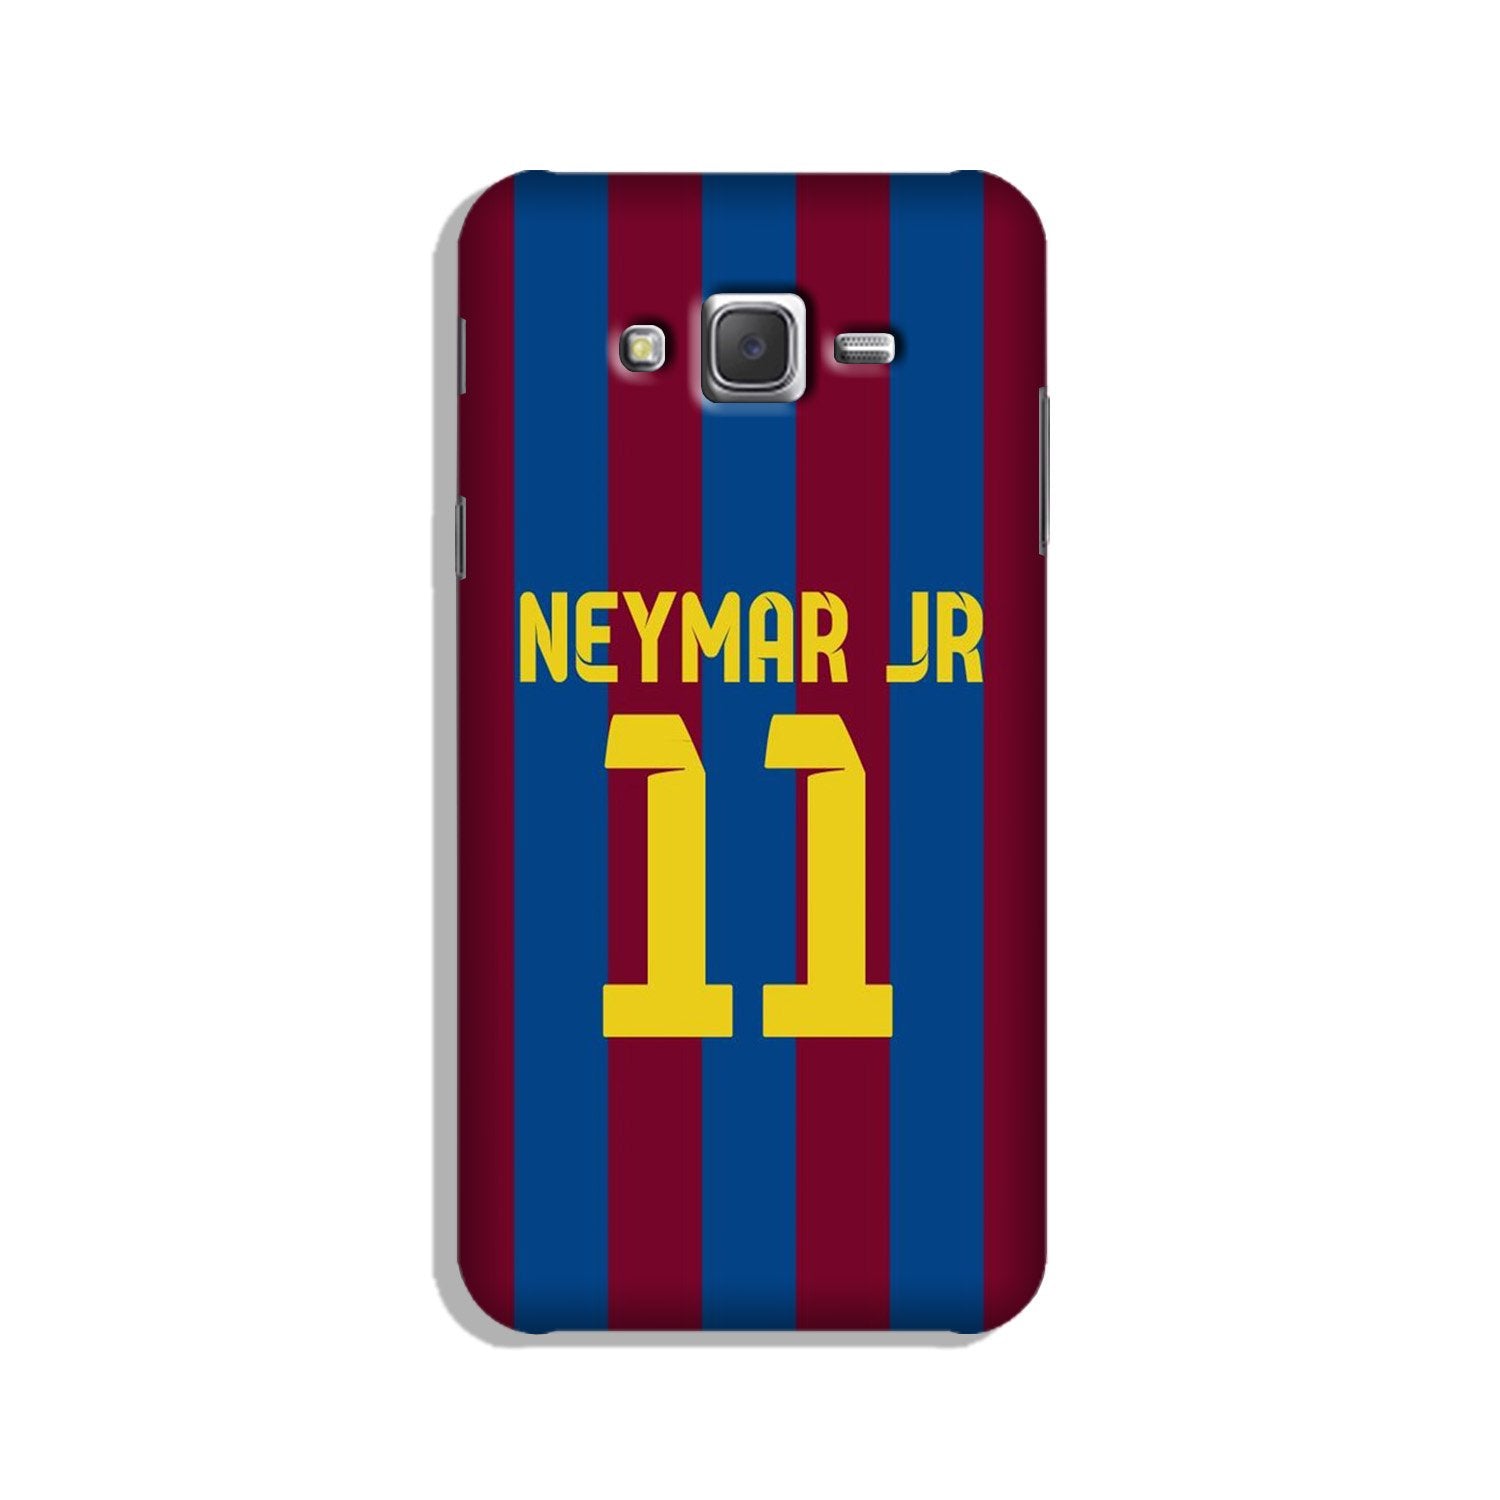 Neymar Jr Case for Galaxy On5/ On5 Pro(Design - 162)